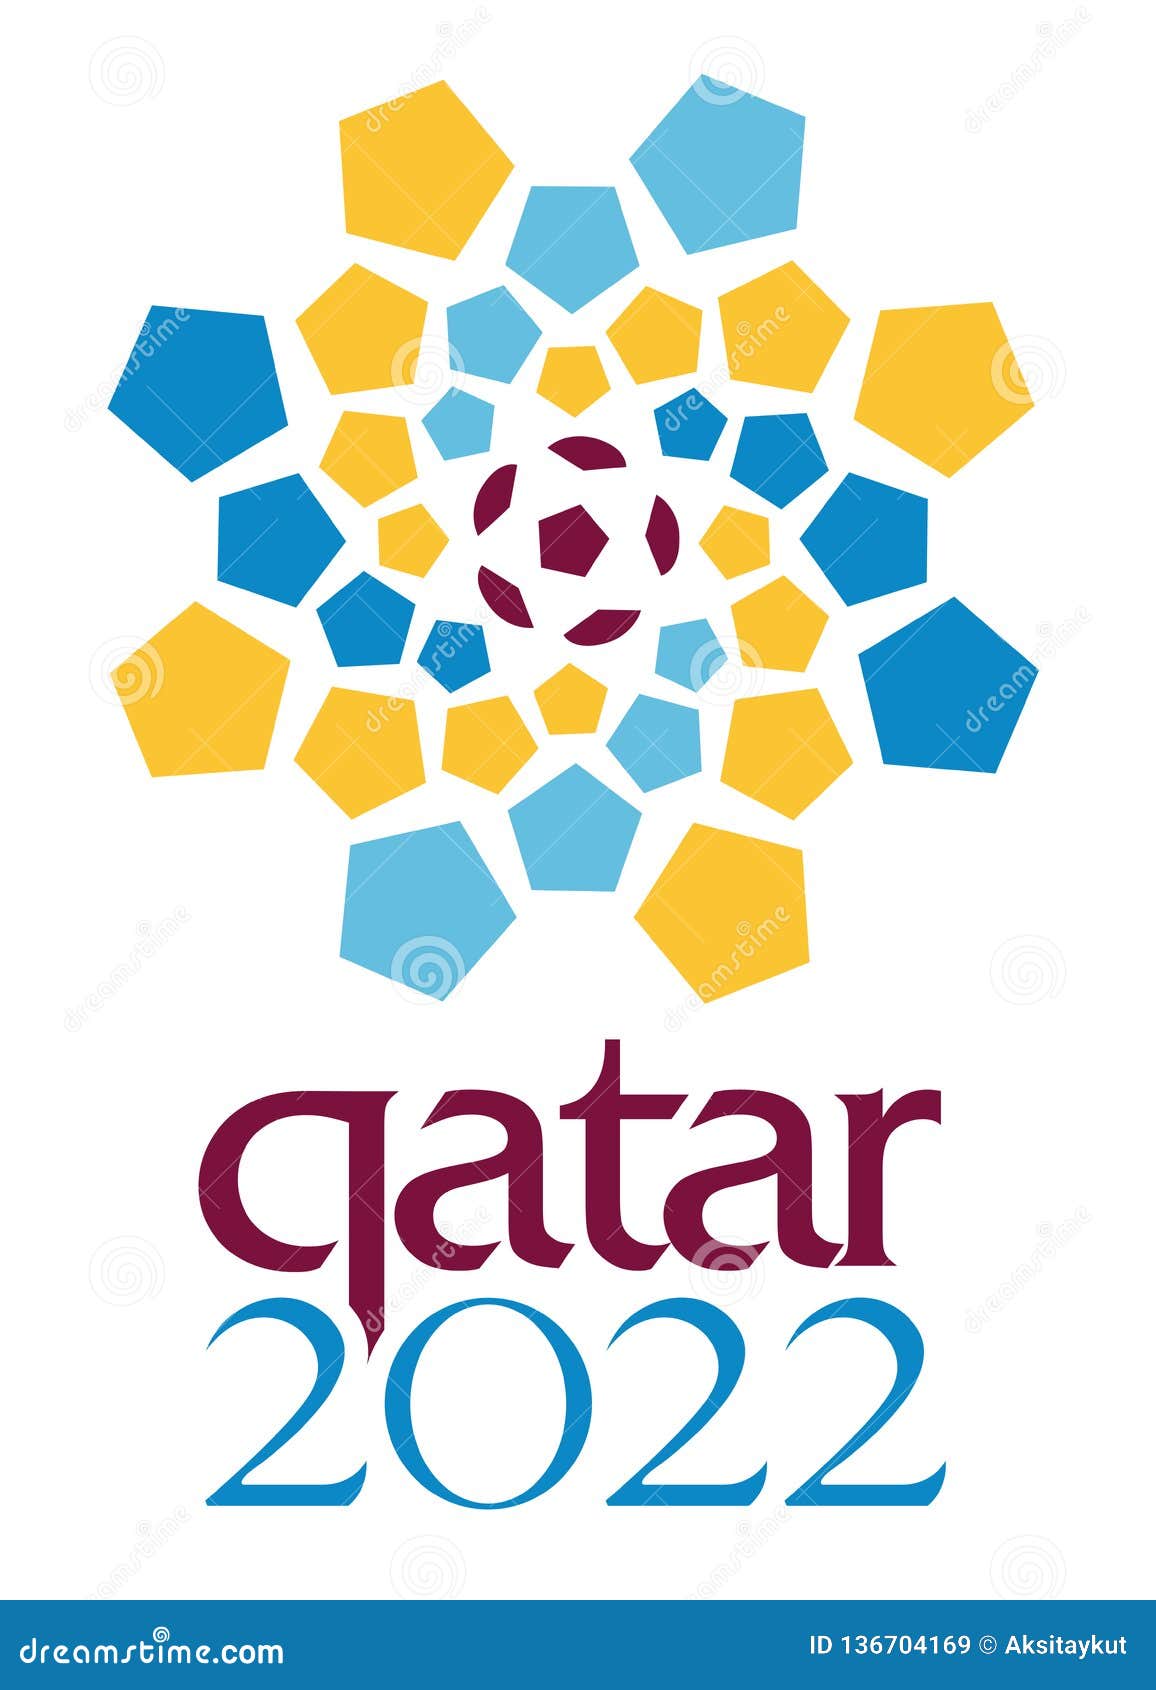 Editorial - Qatar 2022 World Cup Logo Editorial Stock Image